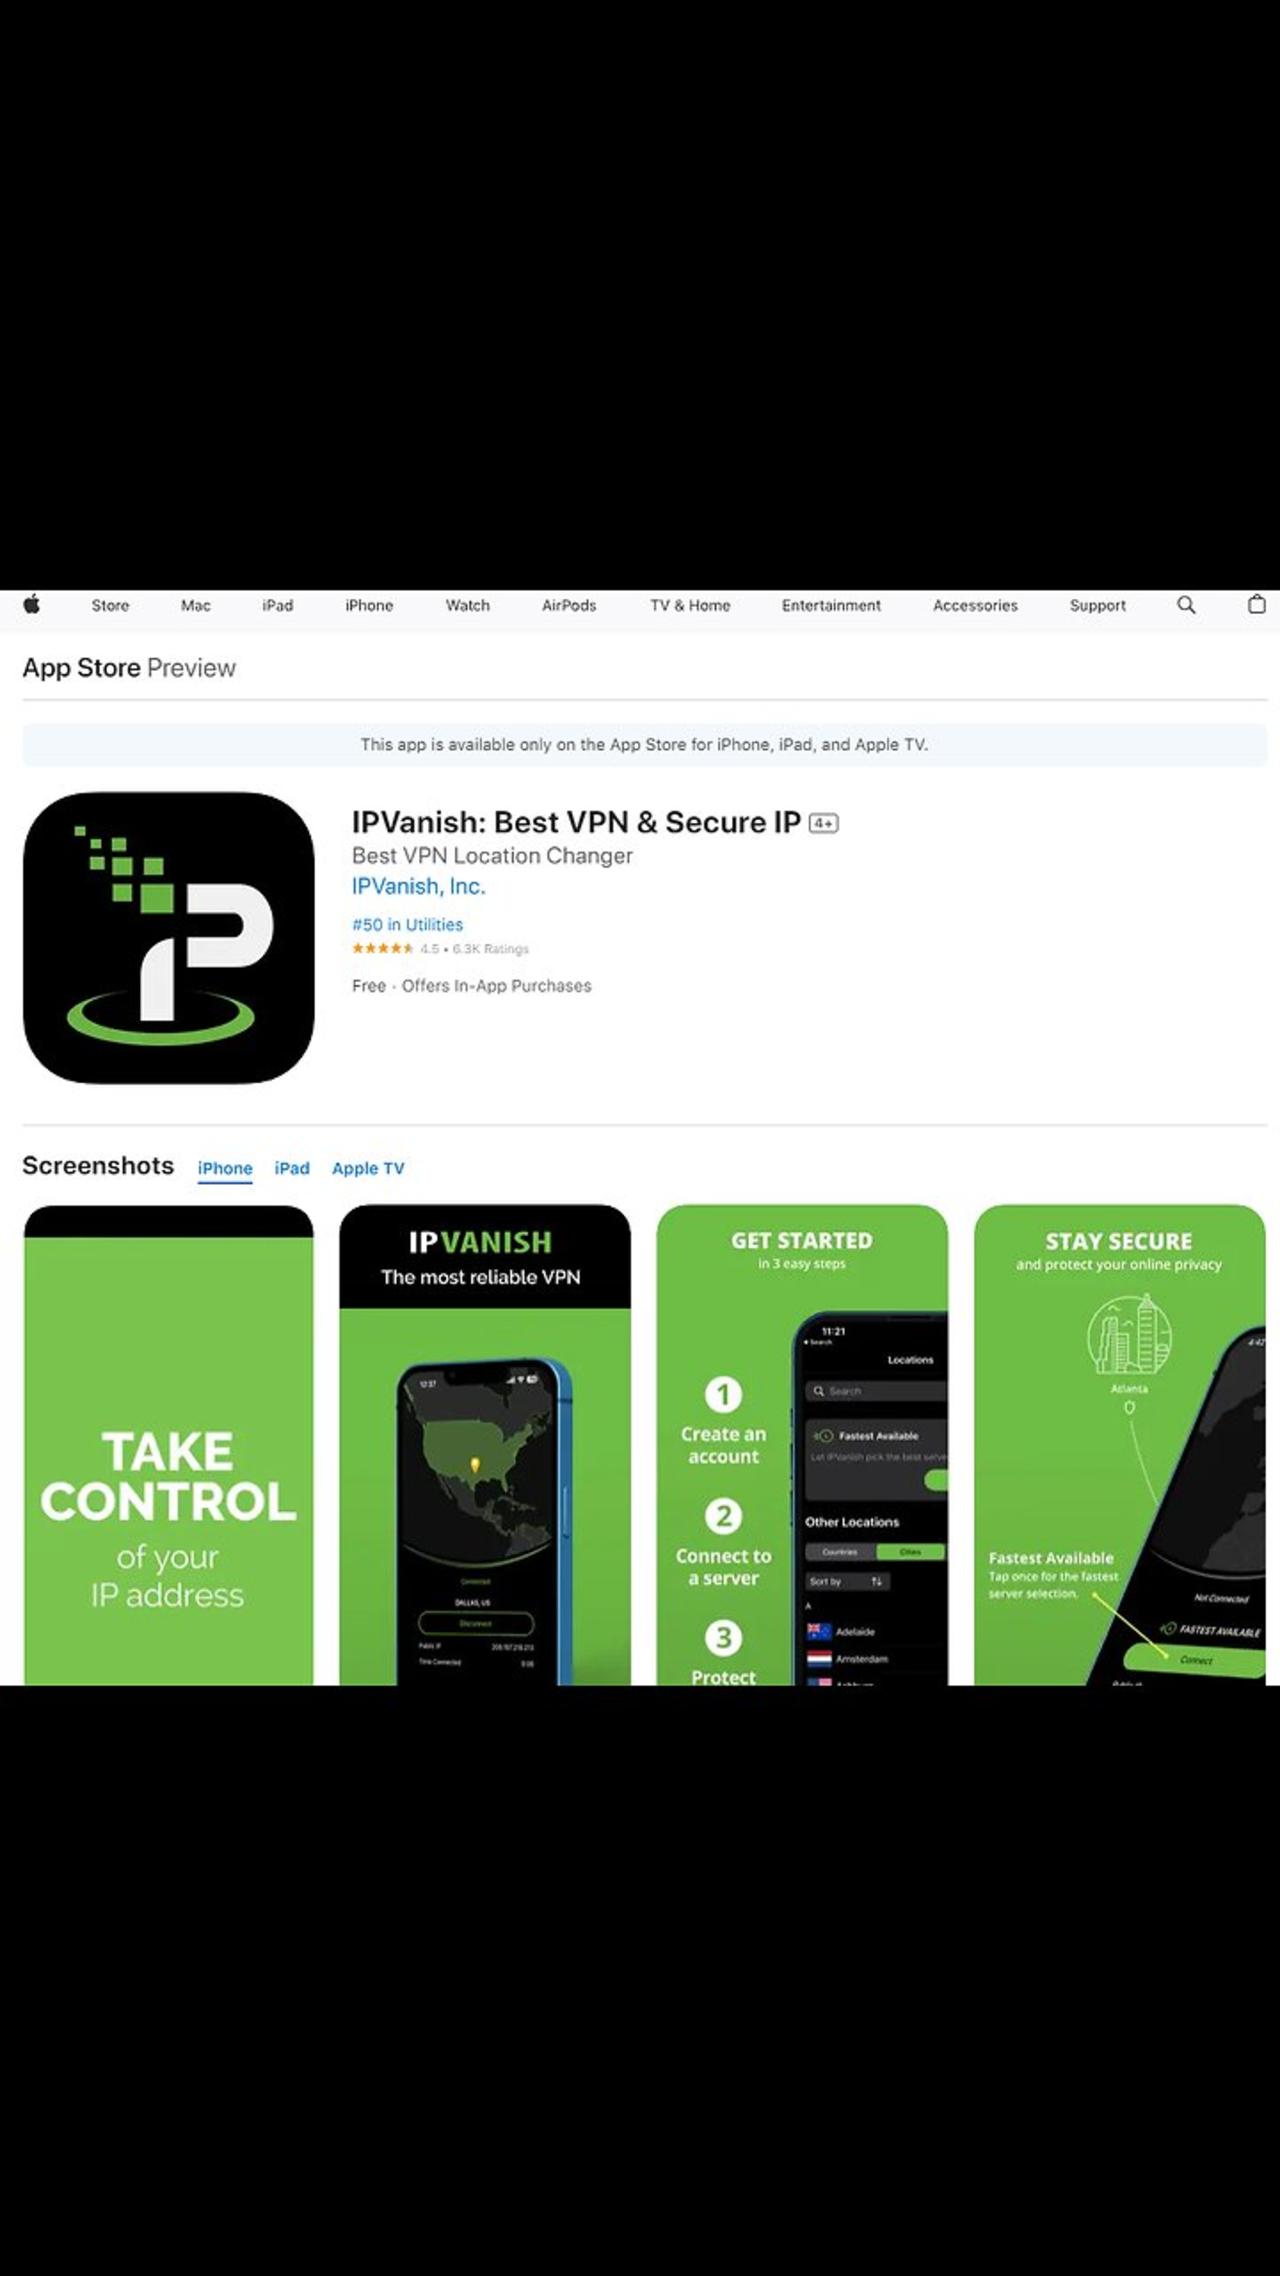 Start Your Trial With the IPVanish VPN App!